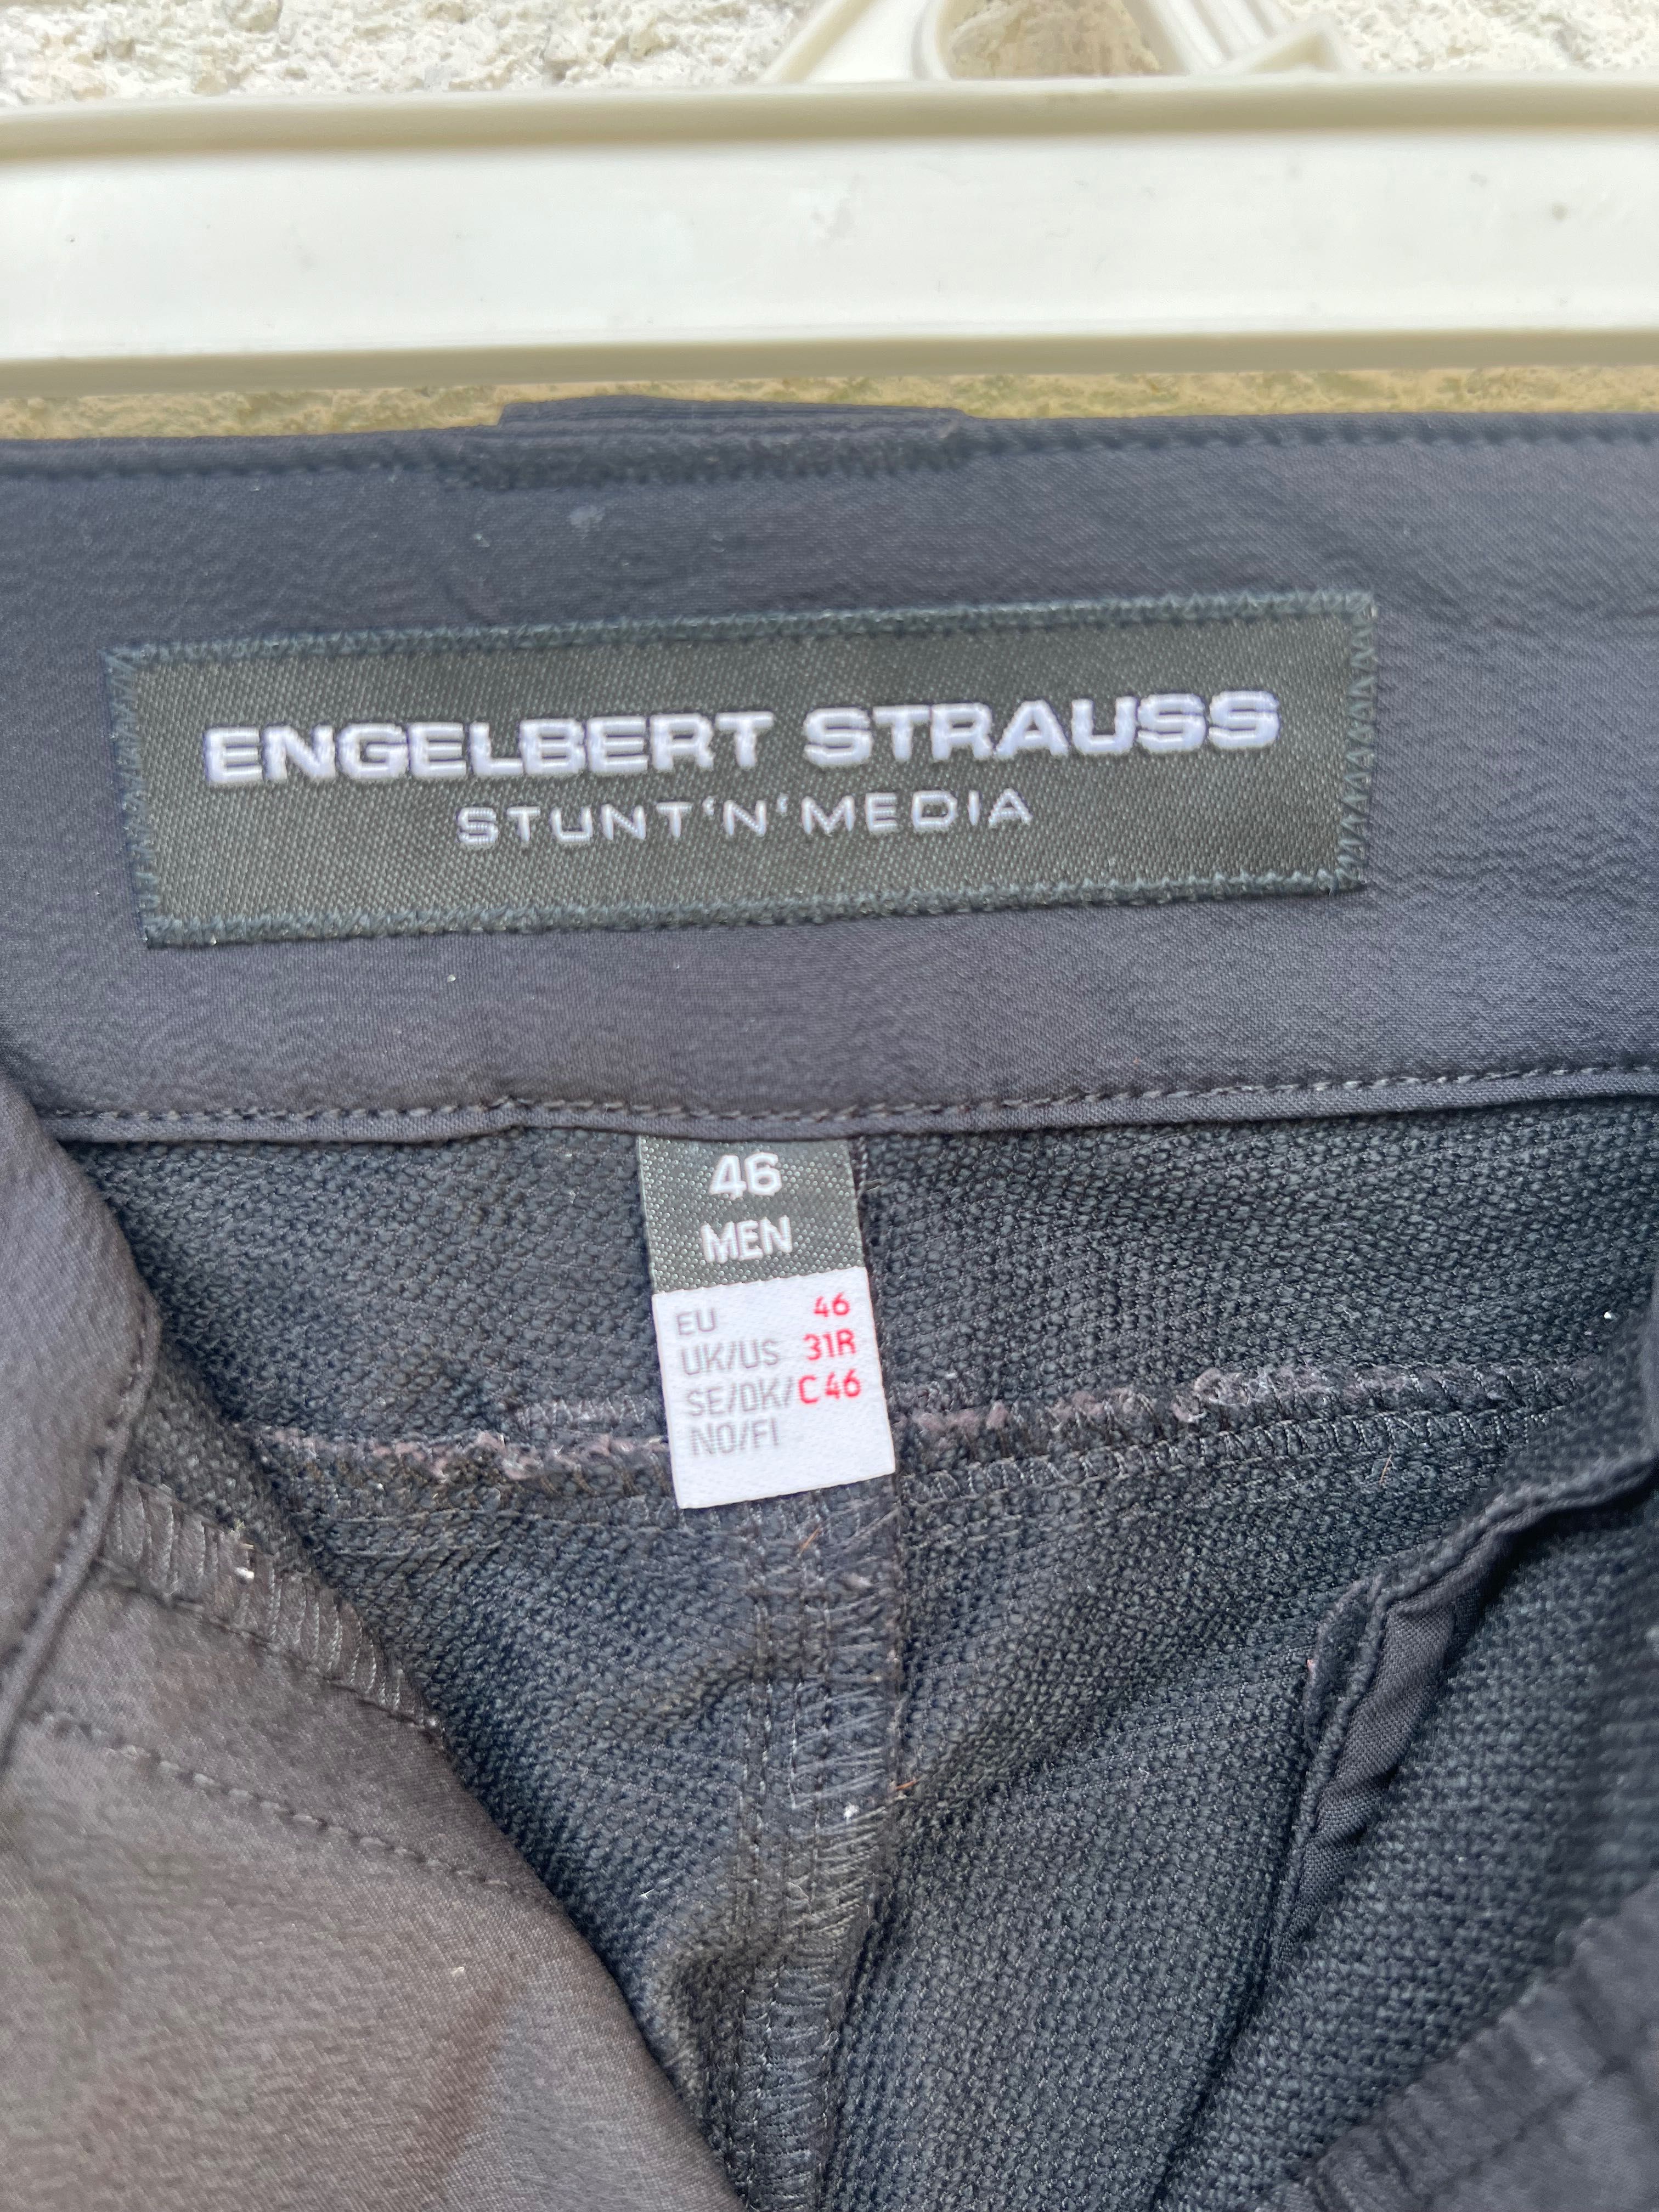 Работен панталон Engelbert Strauss Stunt'N'Media - 46 размер